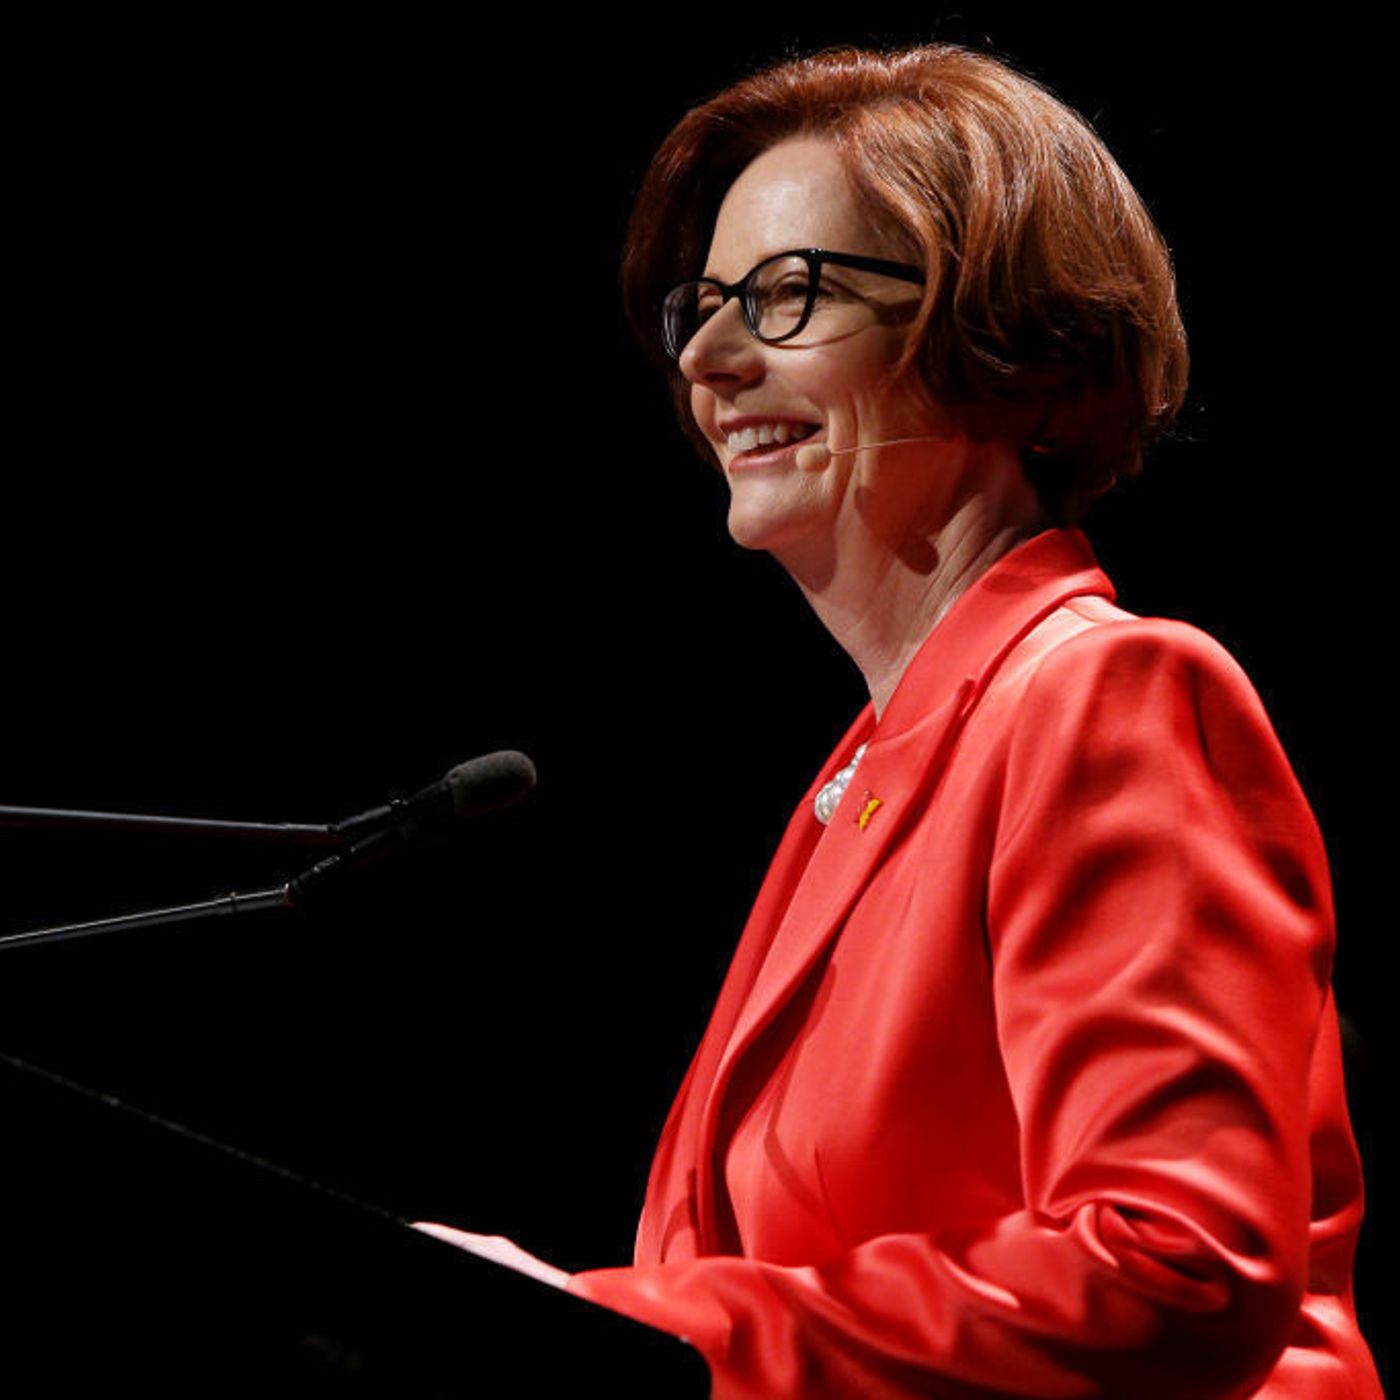 Julia Gillard: Women and Leadership